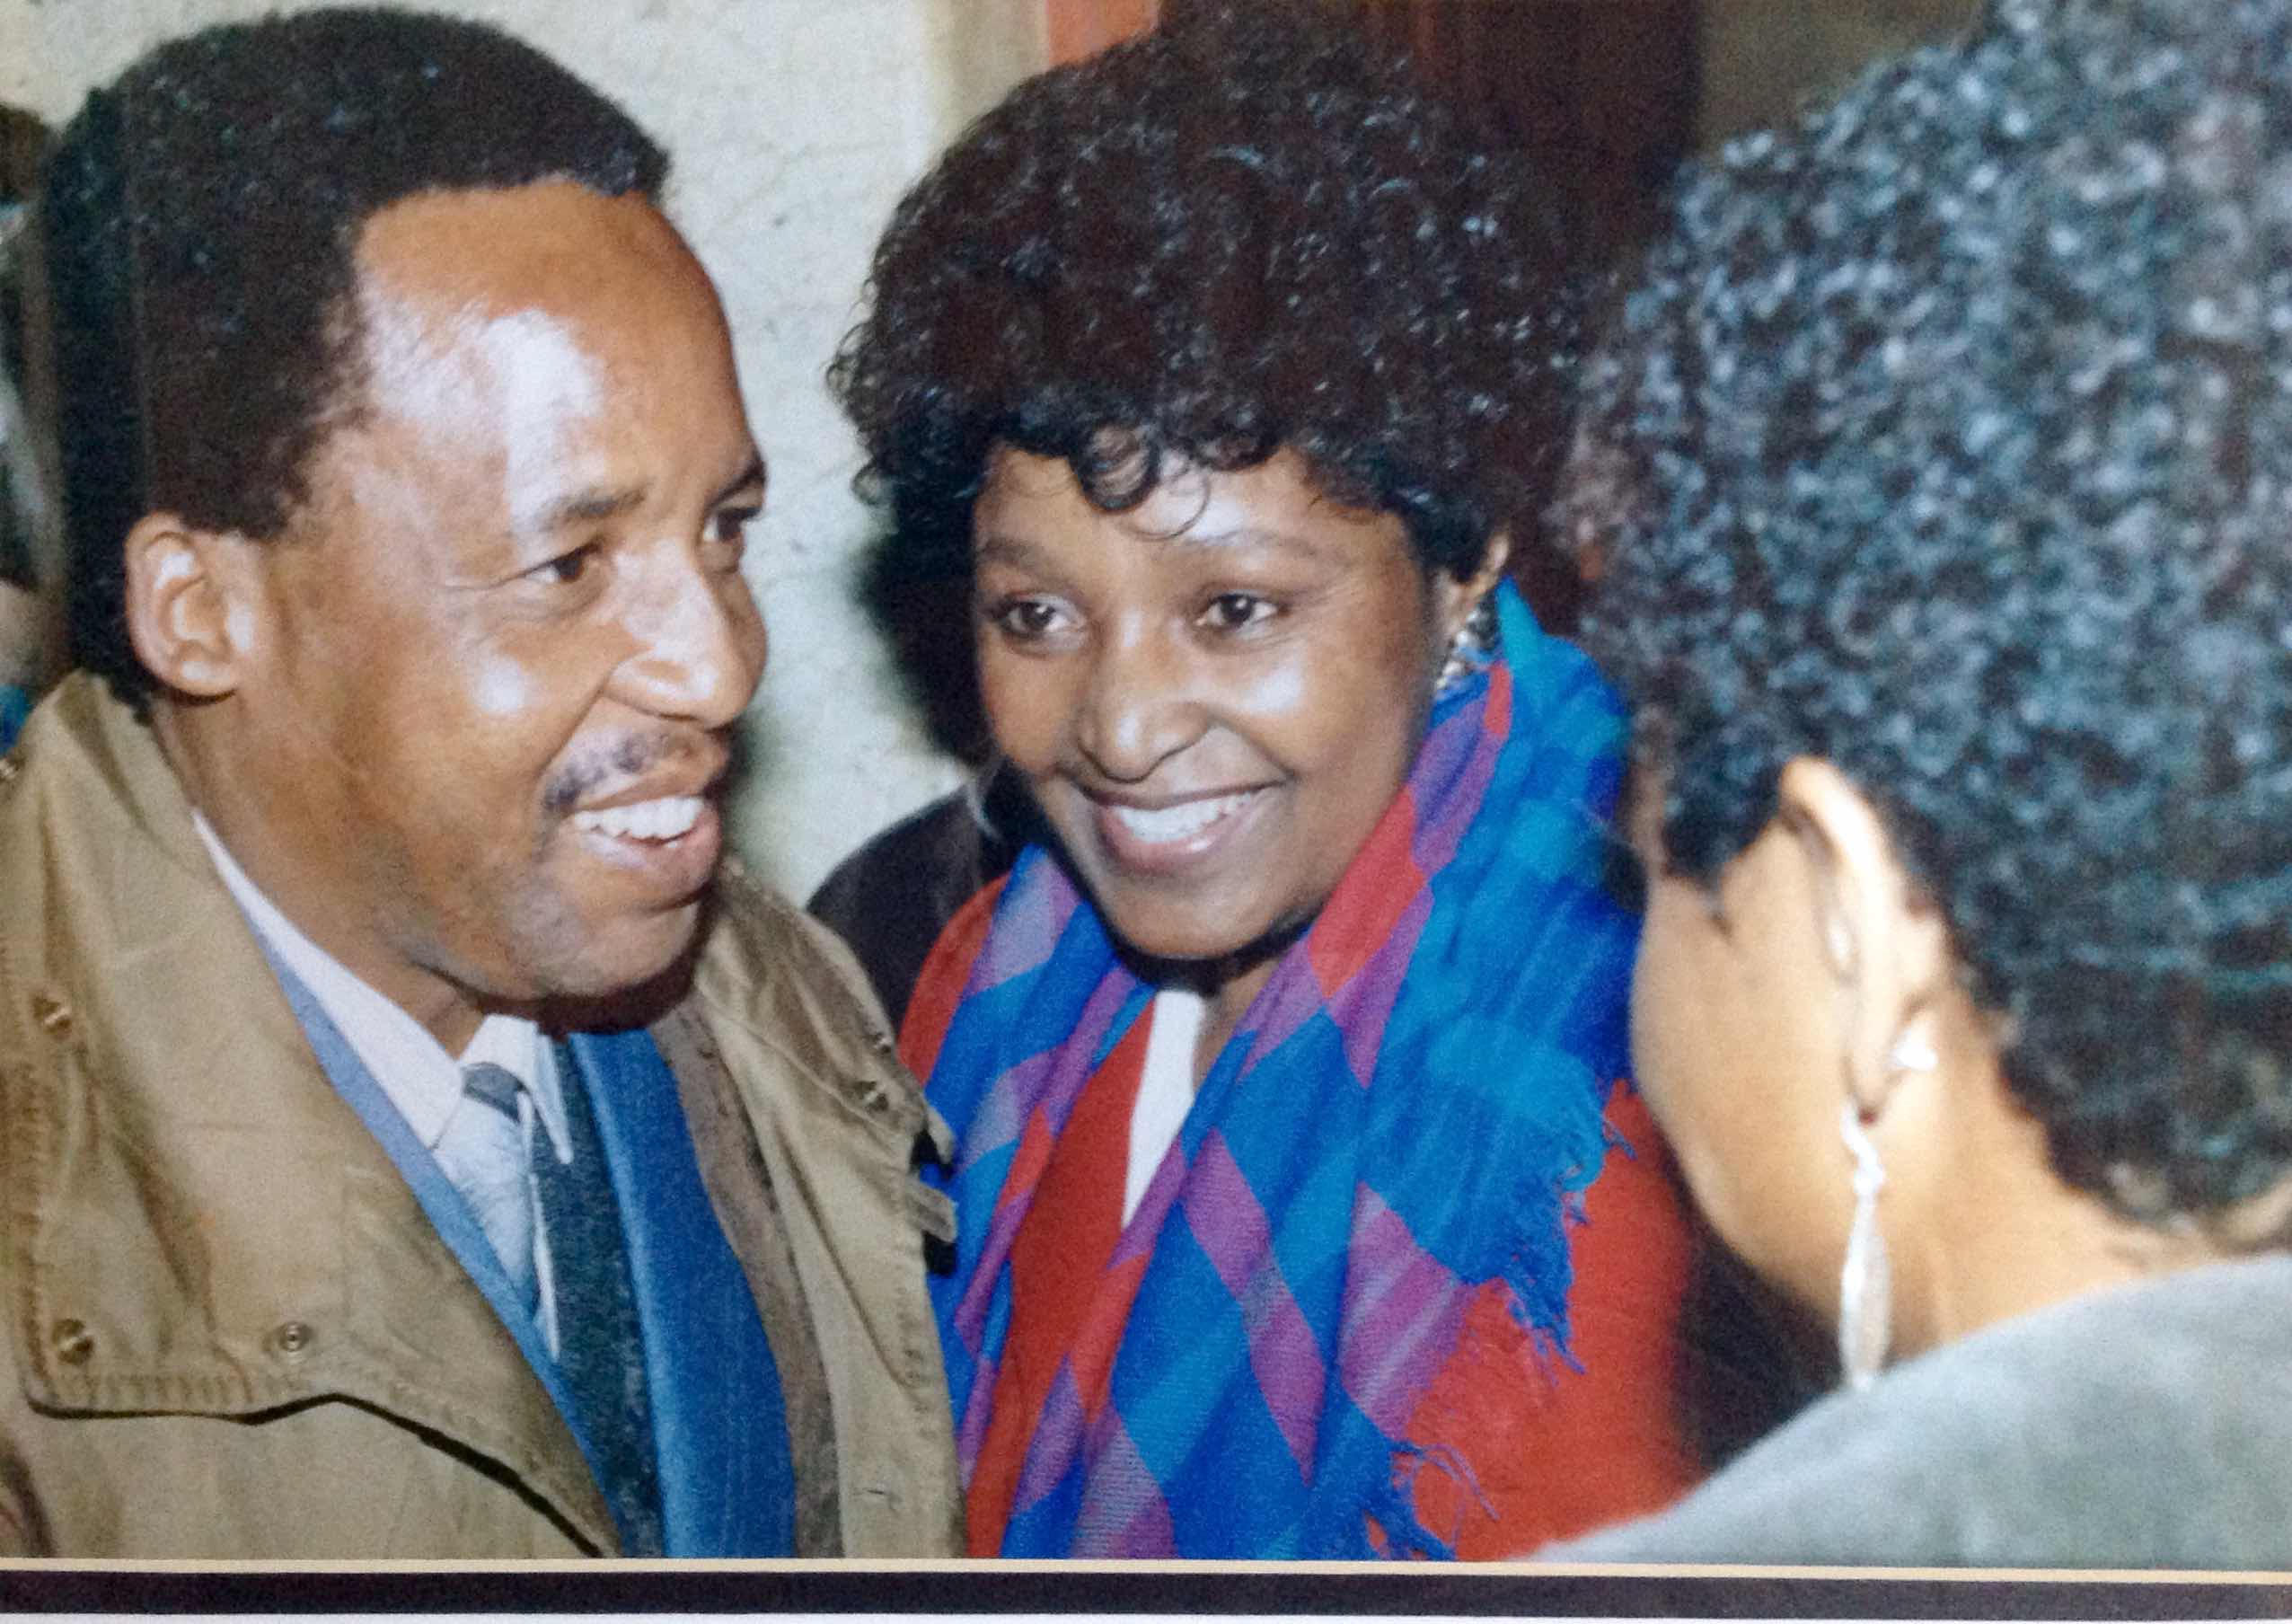 Chris Hani, Winnie Mandela and Sylvia Vollenhoven in Lusaka in 1989. Photo courtesy of Rashid Lombard.